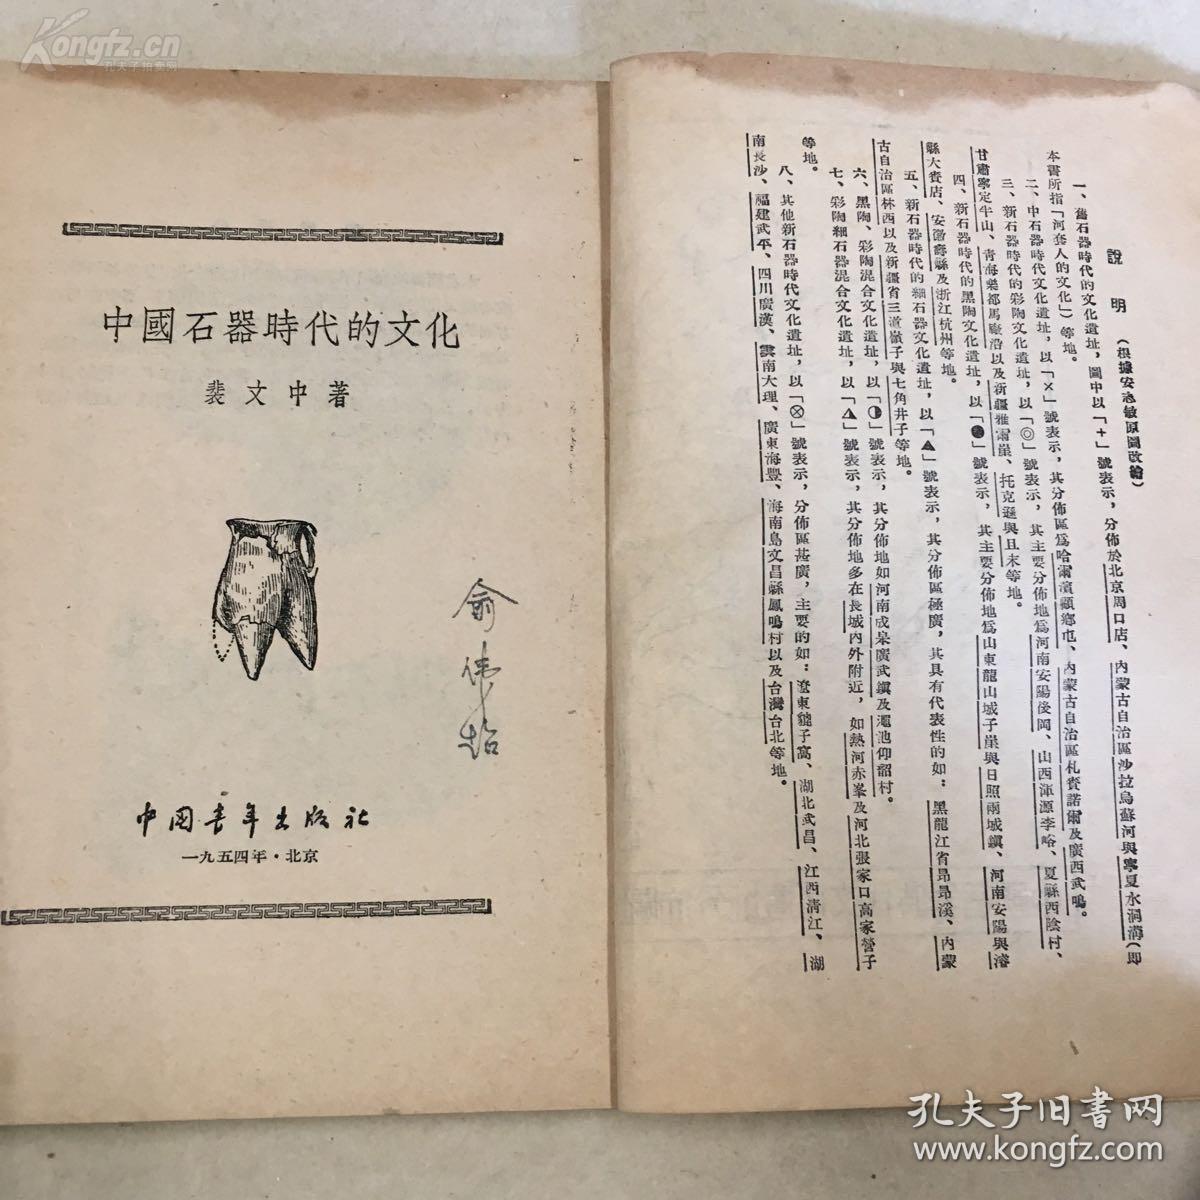 【SFKF·QMB·0·】·签名本·著名考古学家俞伟超·墨迹签名·旧藏·1954年中国青年出版社出版·裴文中 著·《中国石器时代的文化》·32开·一版一印